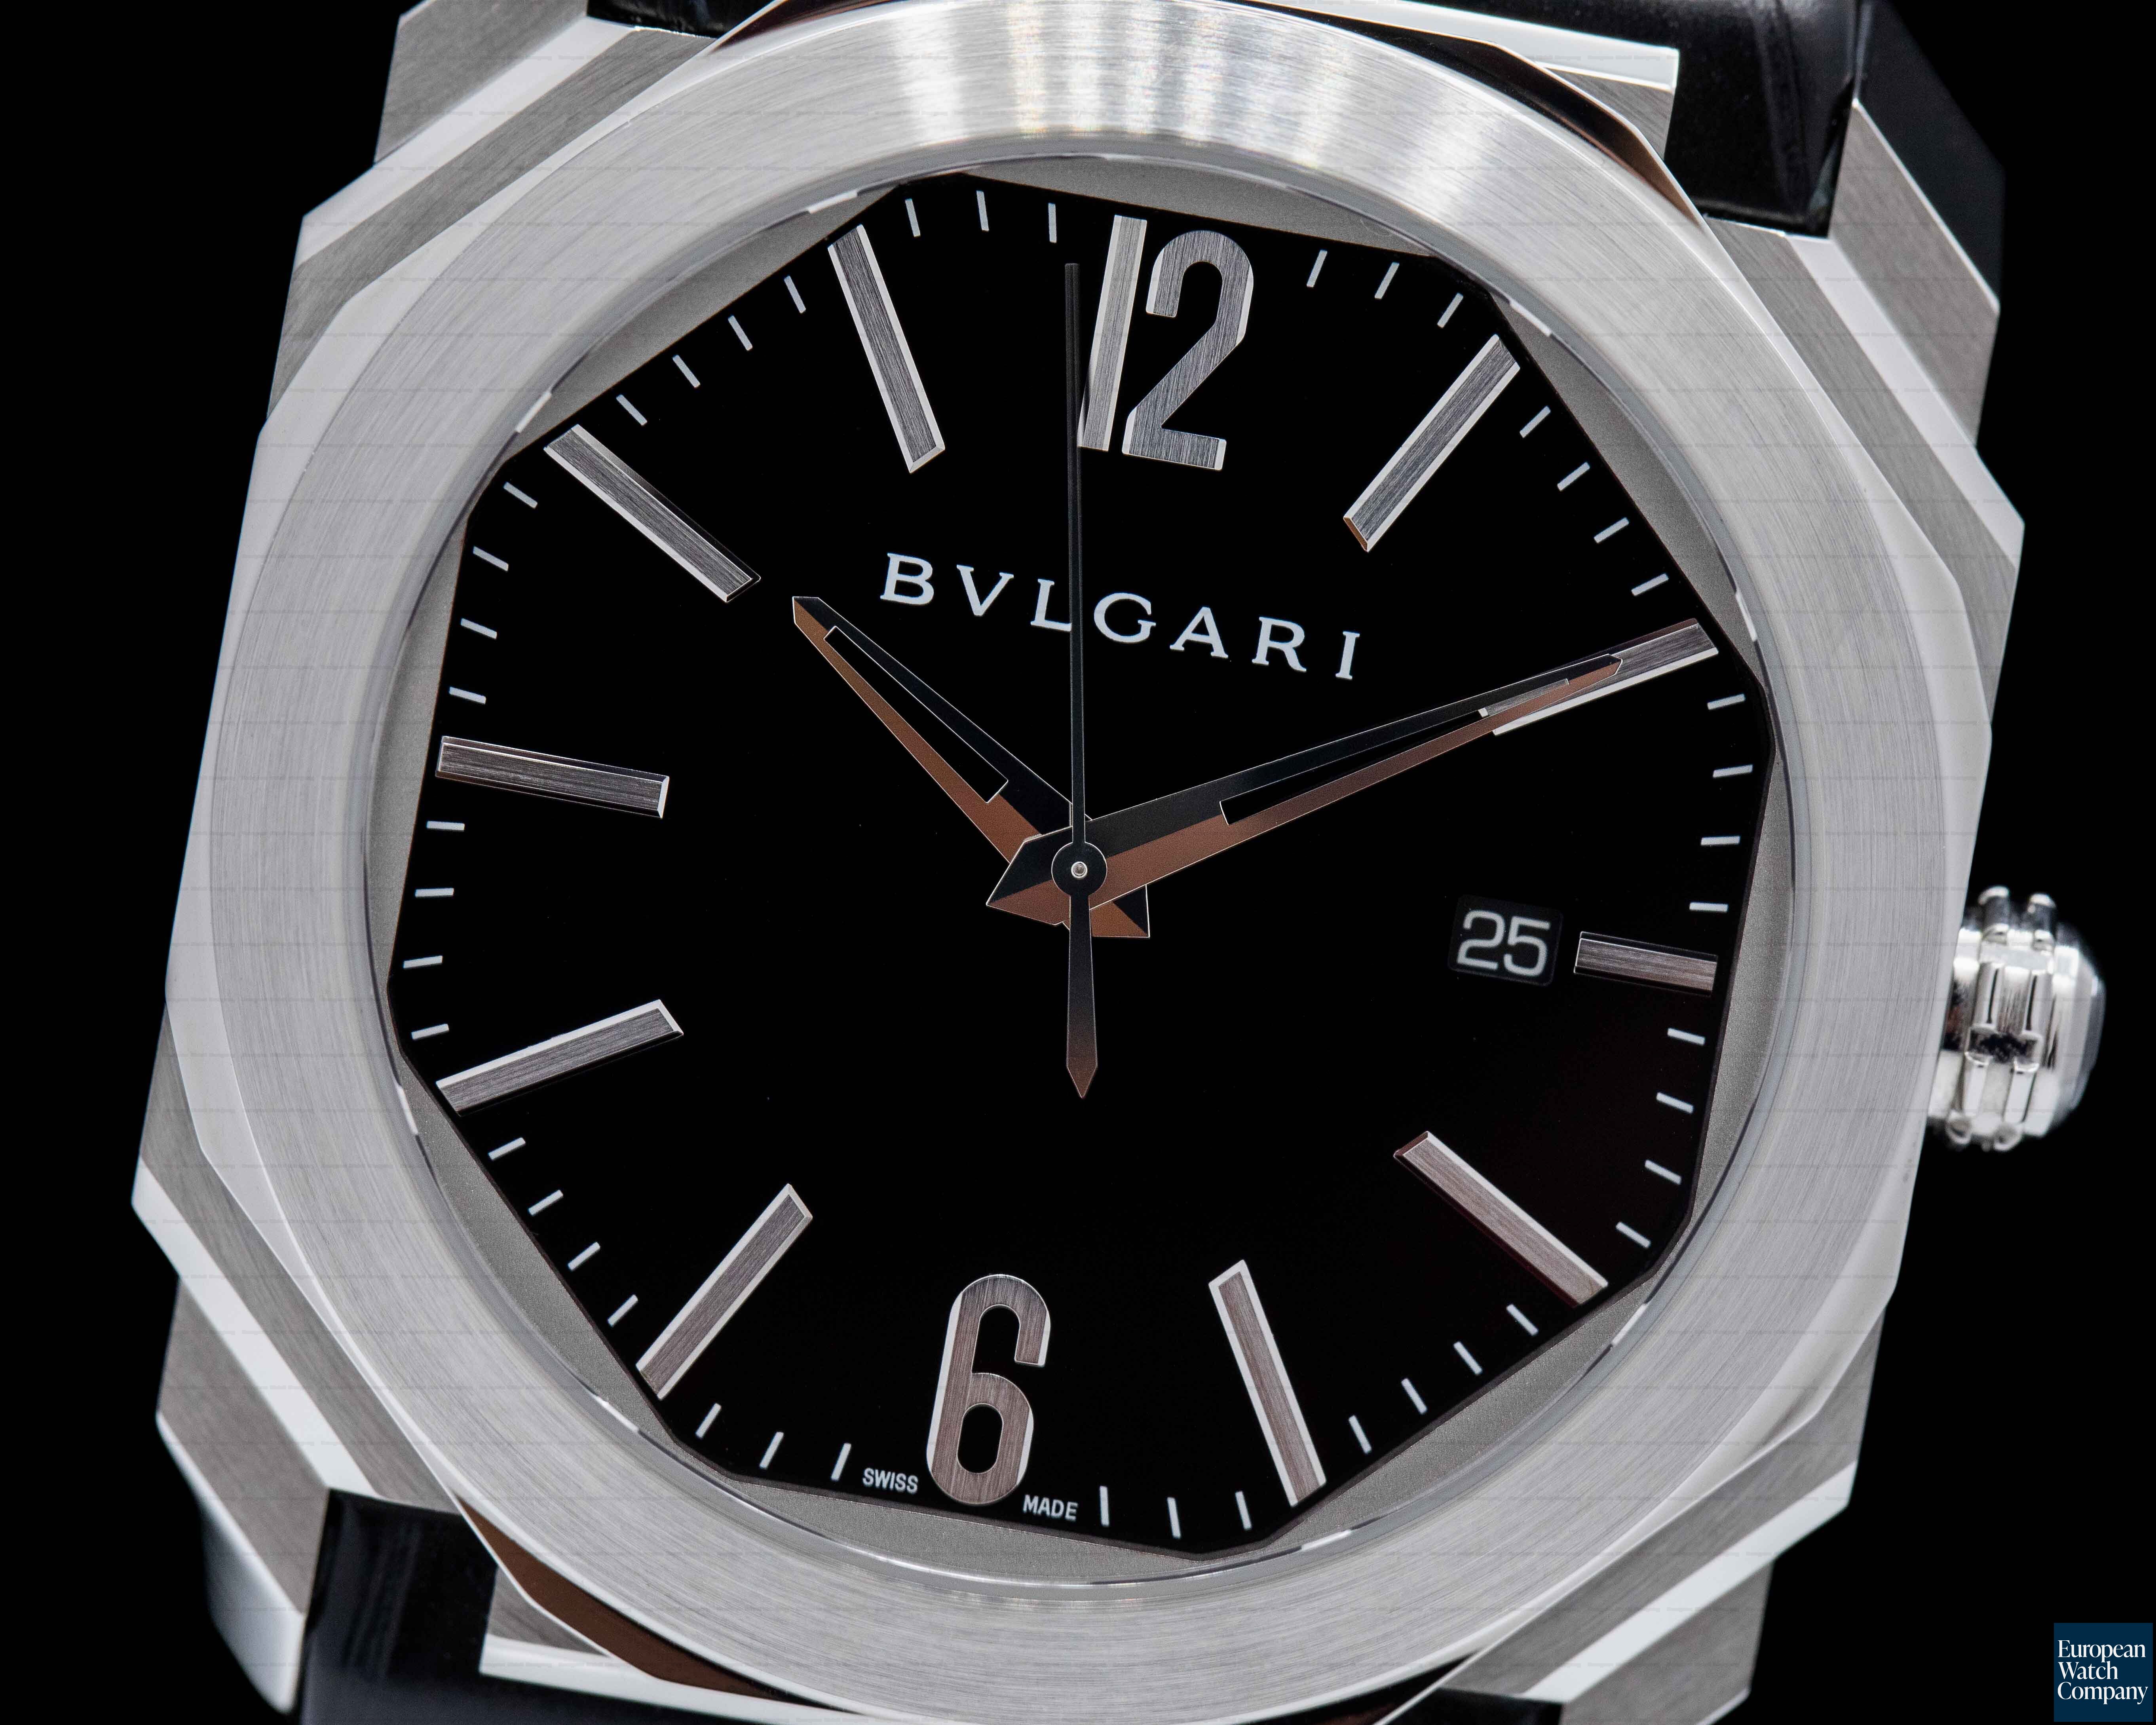 Bulgari 101964 Octo Solotempo 41MM (42046) | European Watch Co.